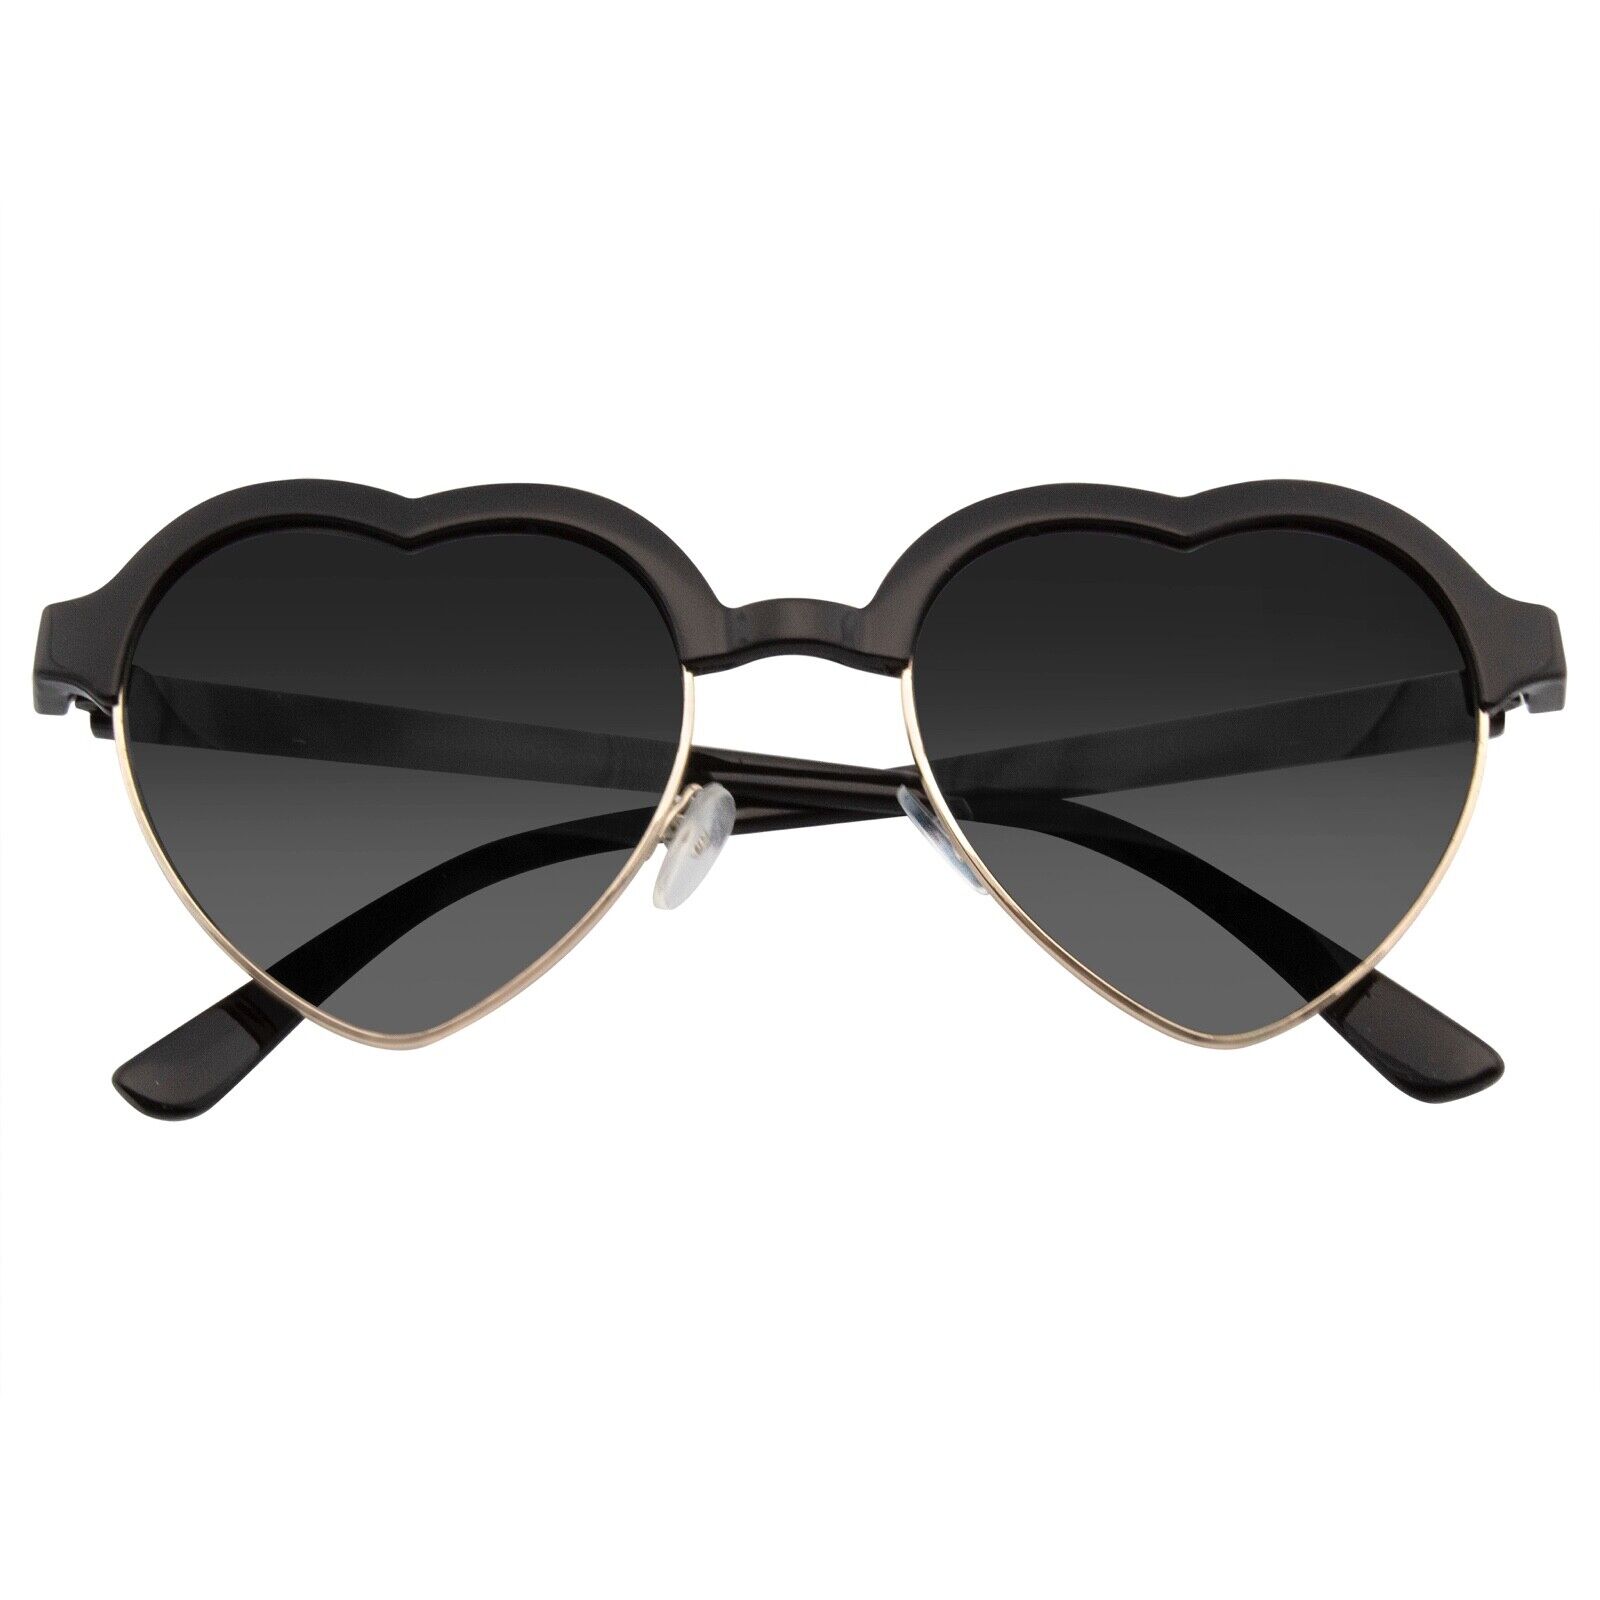 Cute Vintage Half Frame Inspired Heart Shape Sunglasses